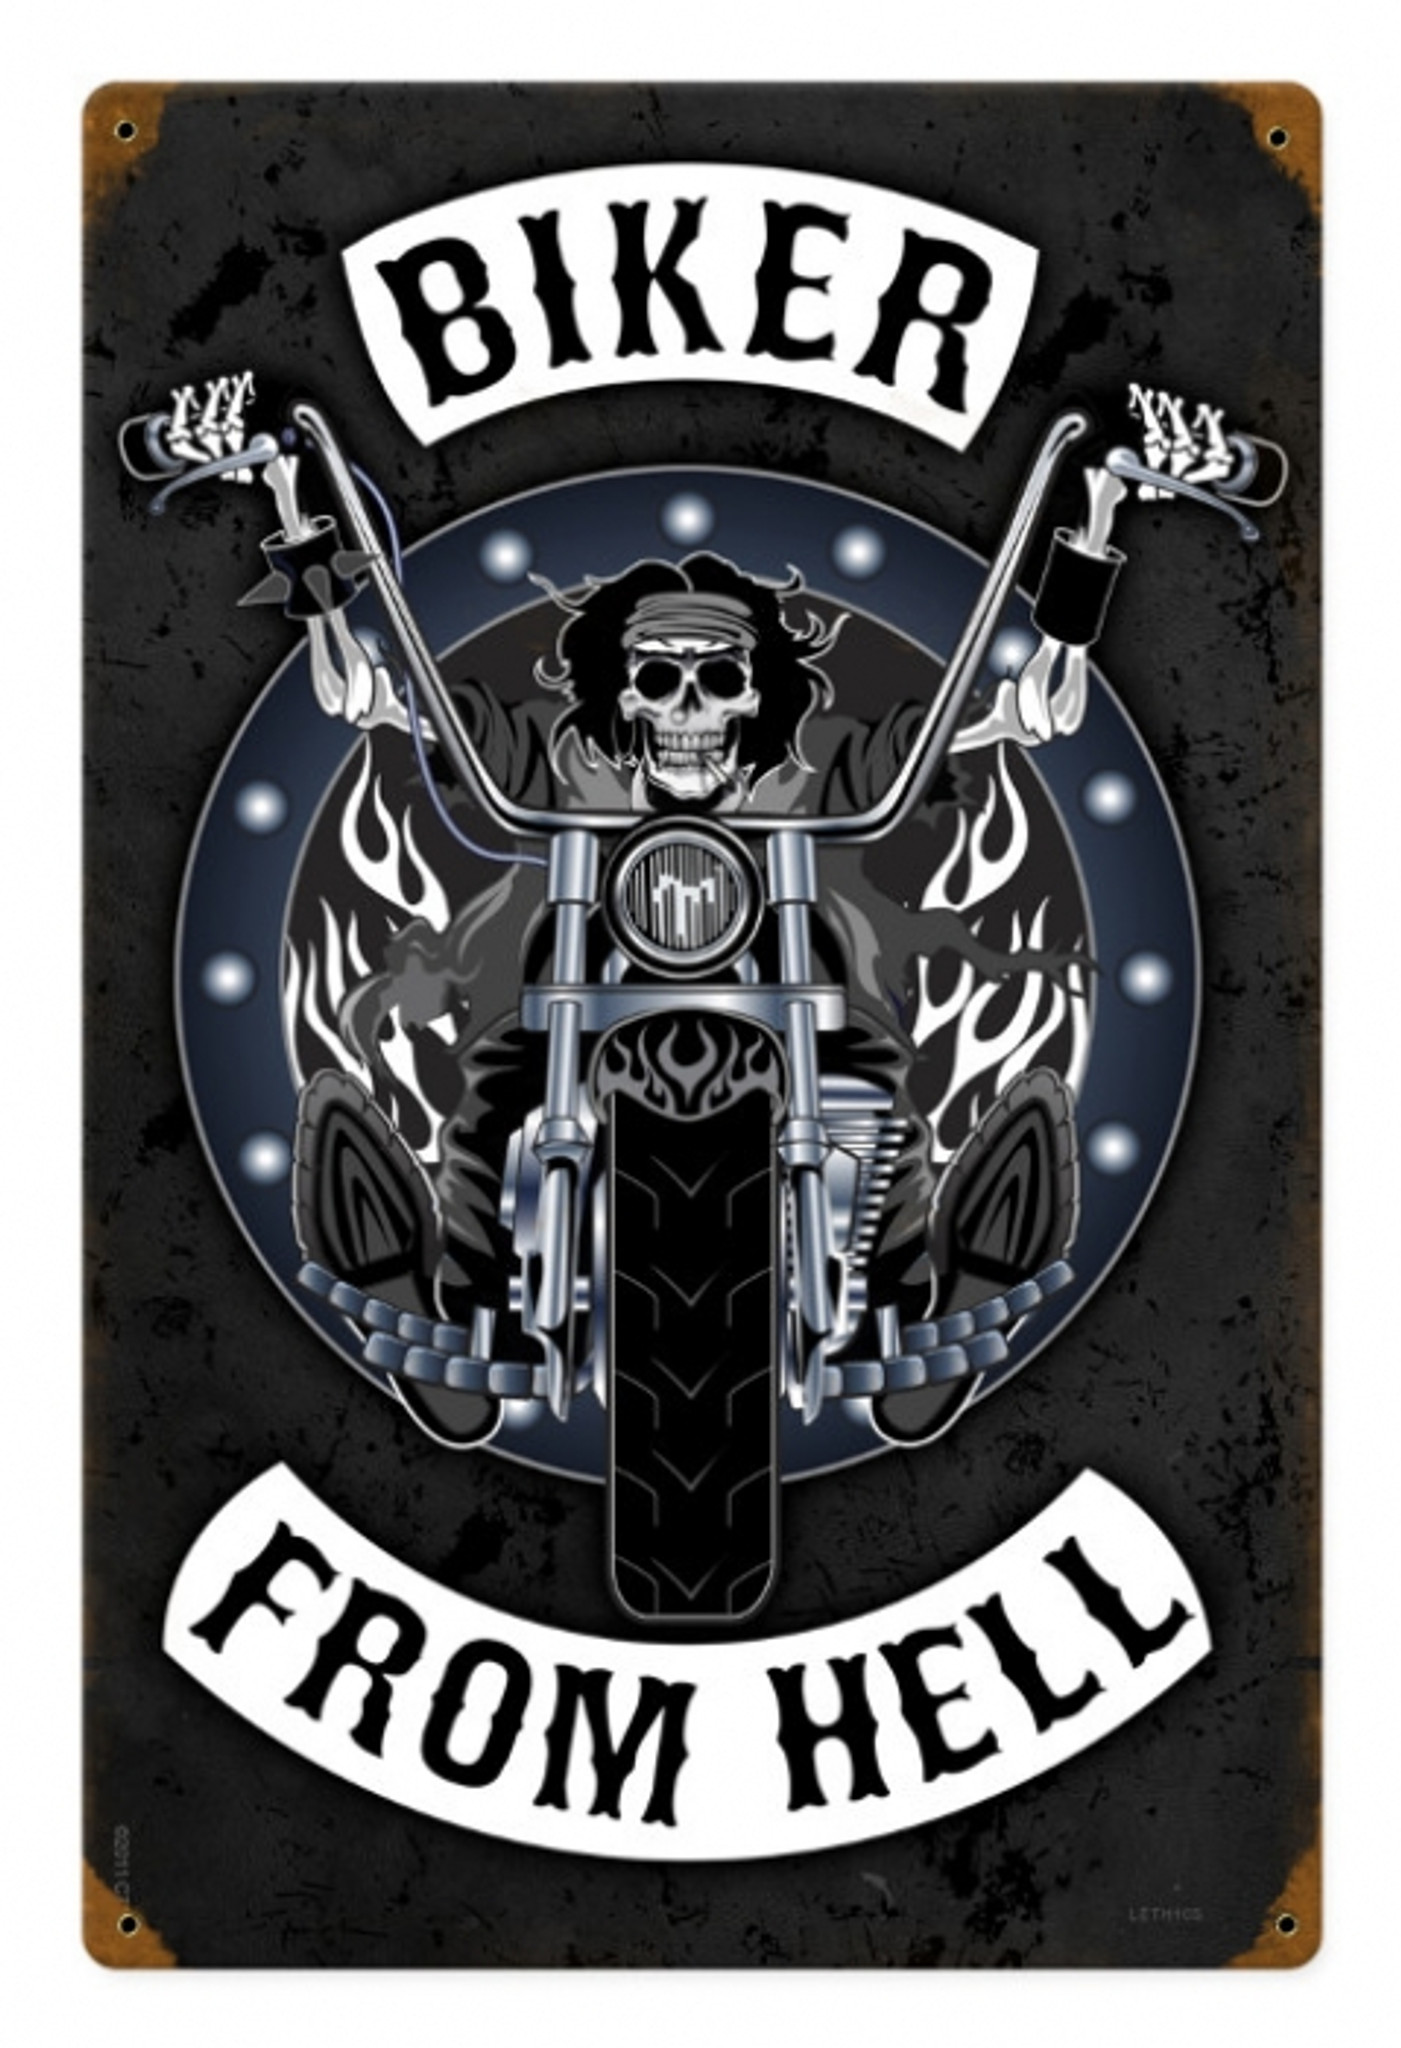 Bike of hell. Череп байкер арт. Логотип байкер Lanius. Old Bike image 480x640.